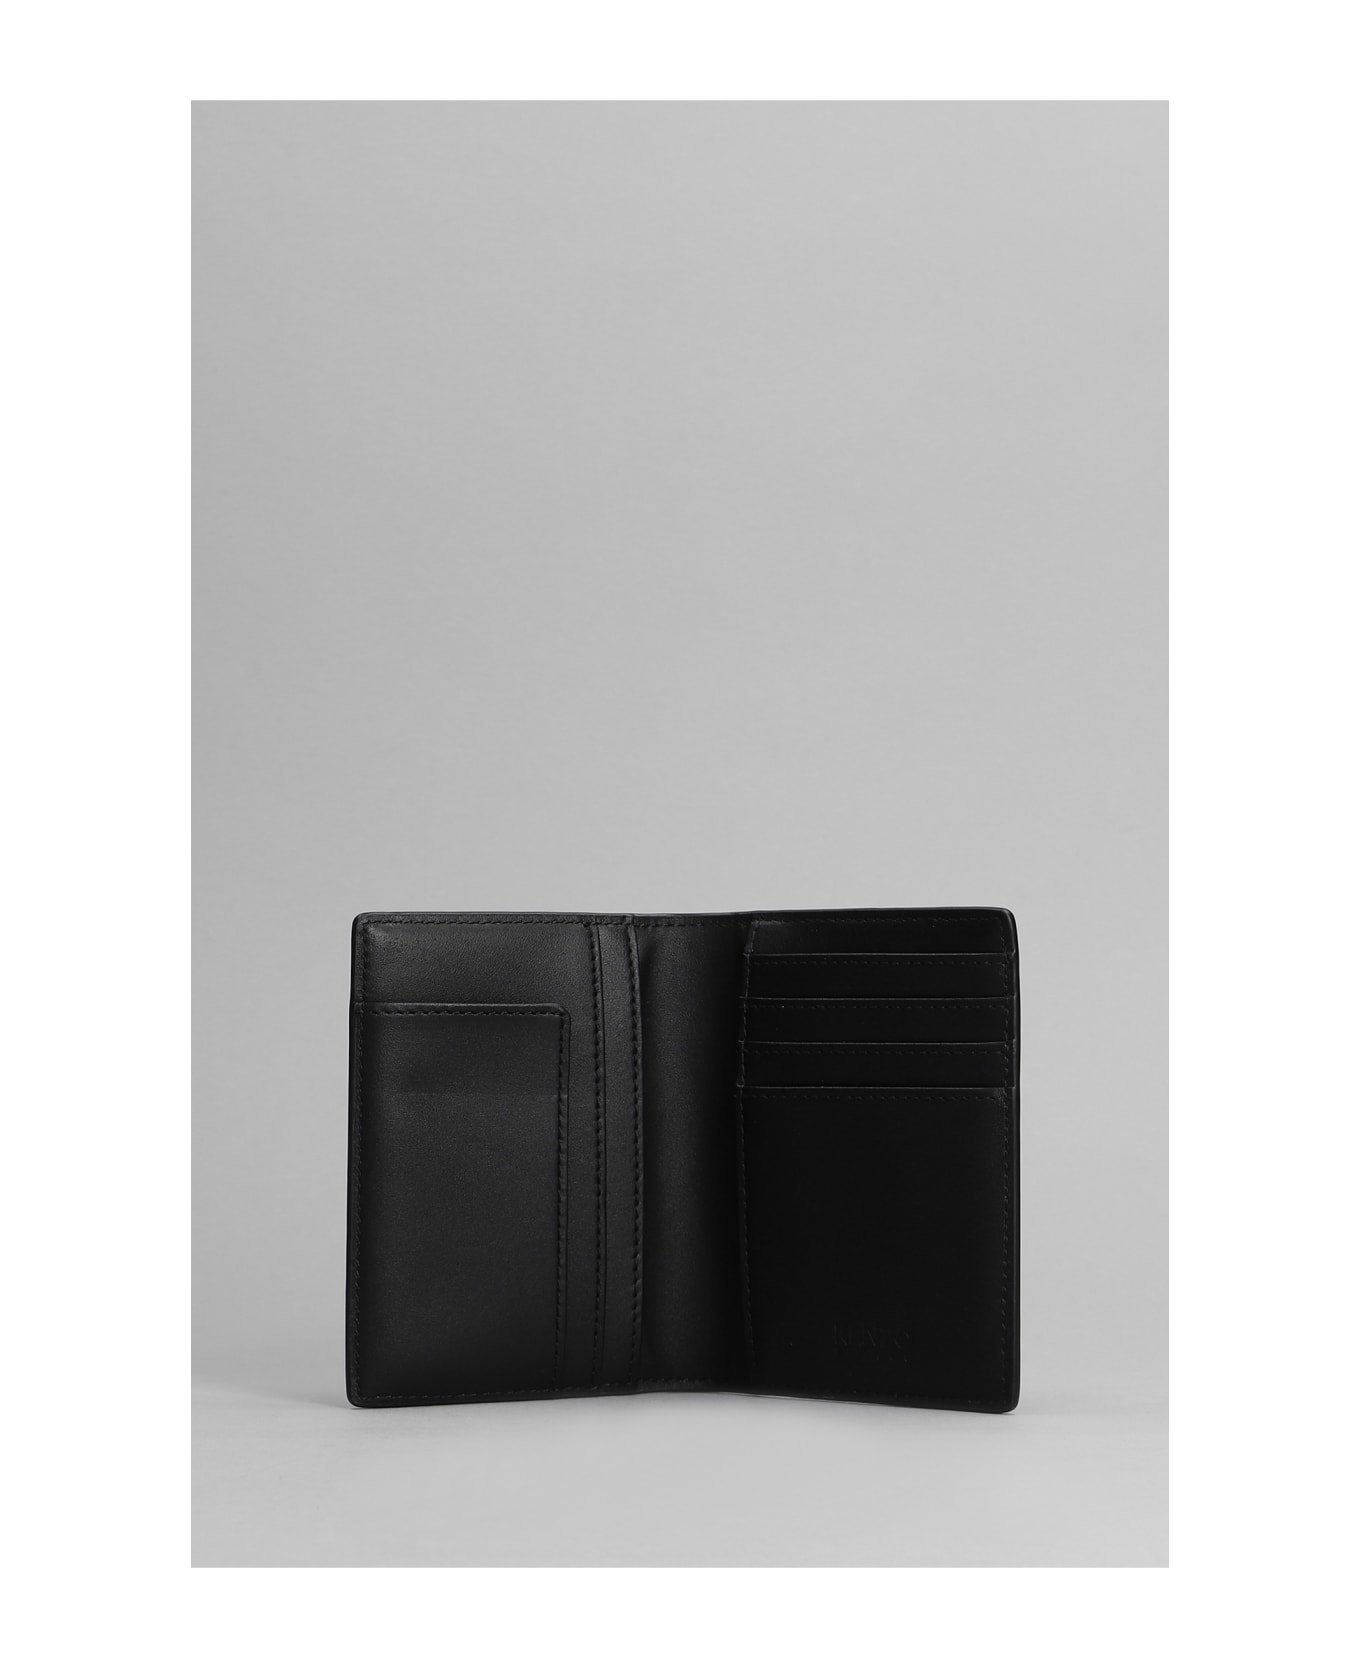 Kenzo Wallet - black